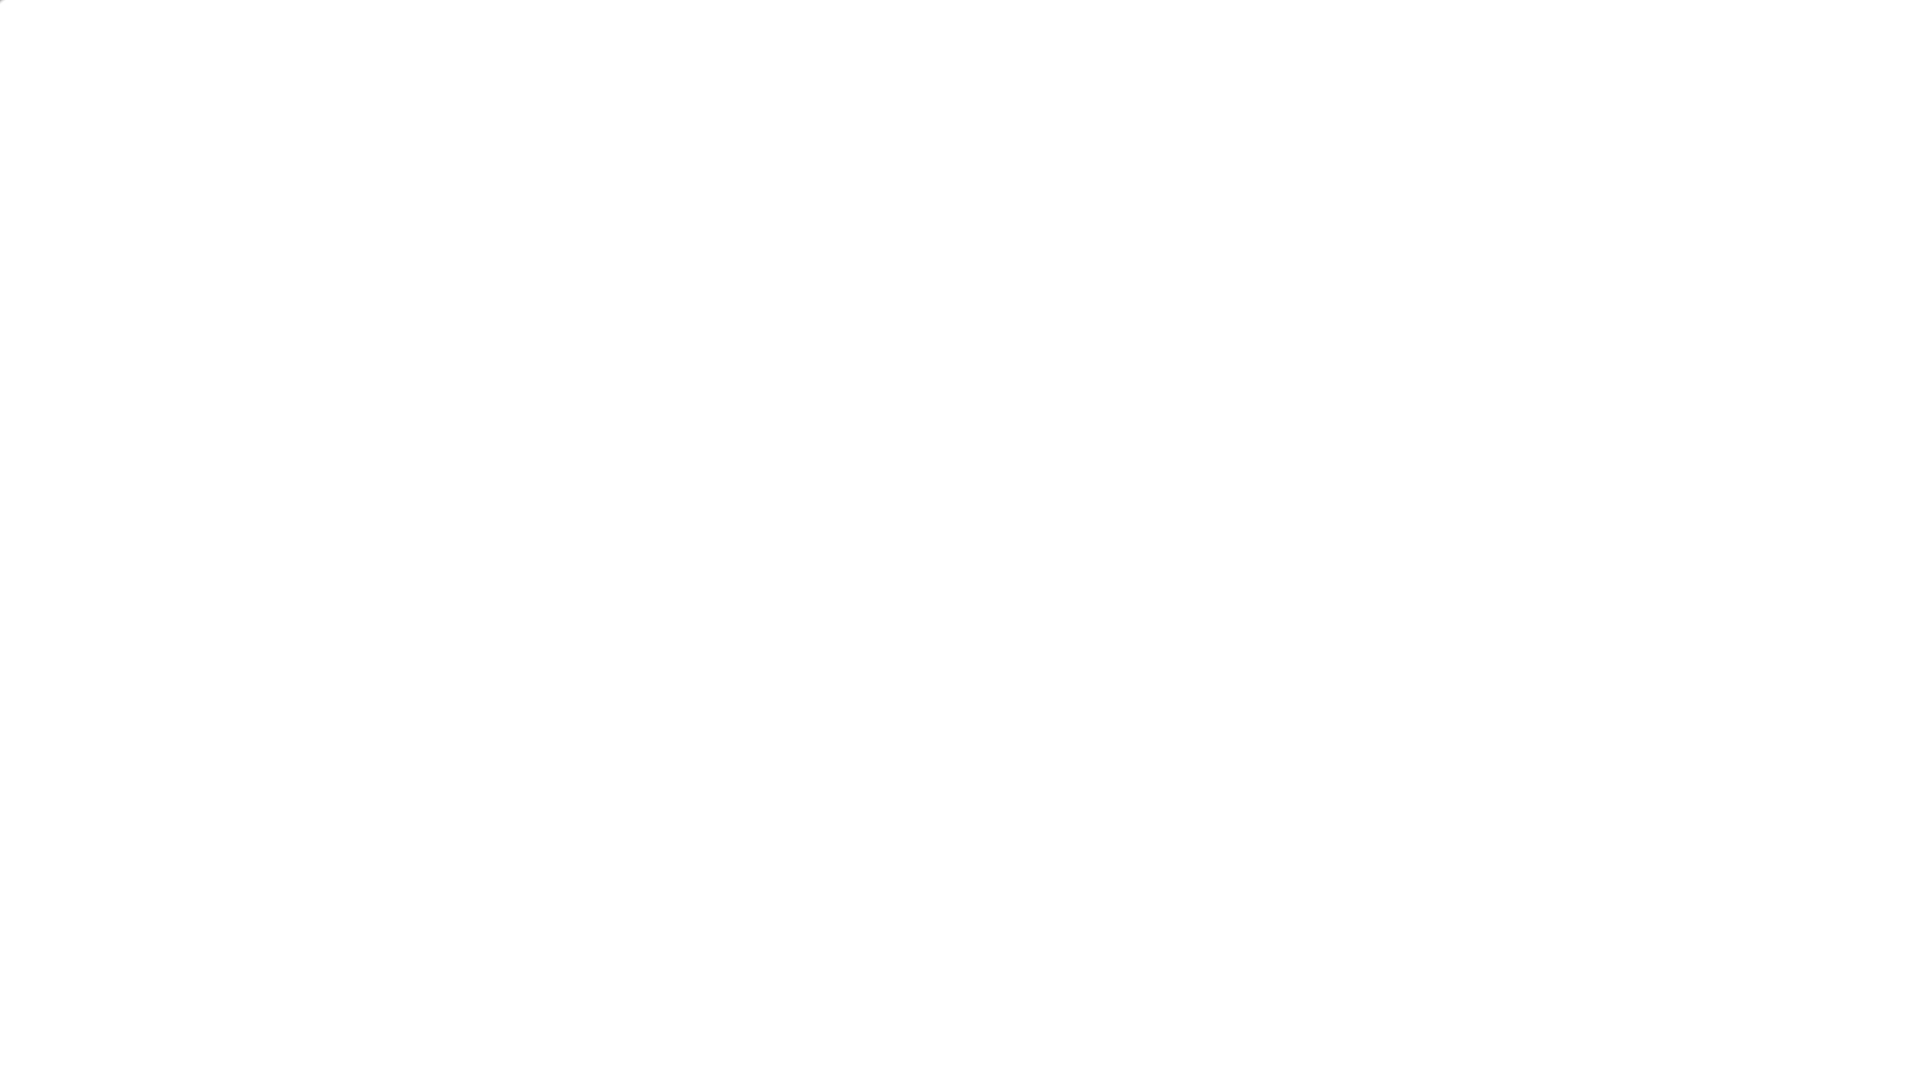 CITY DEFENDER